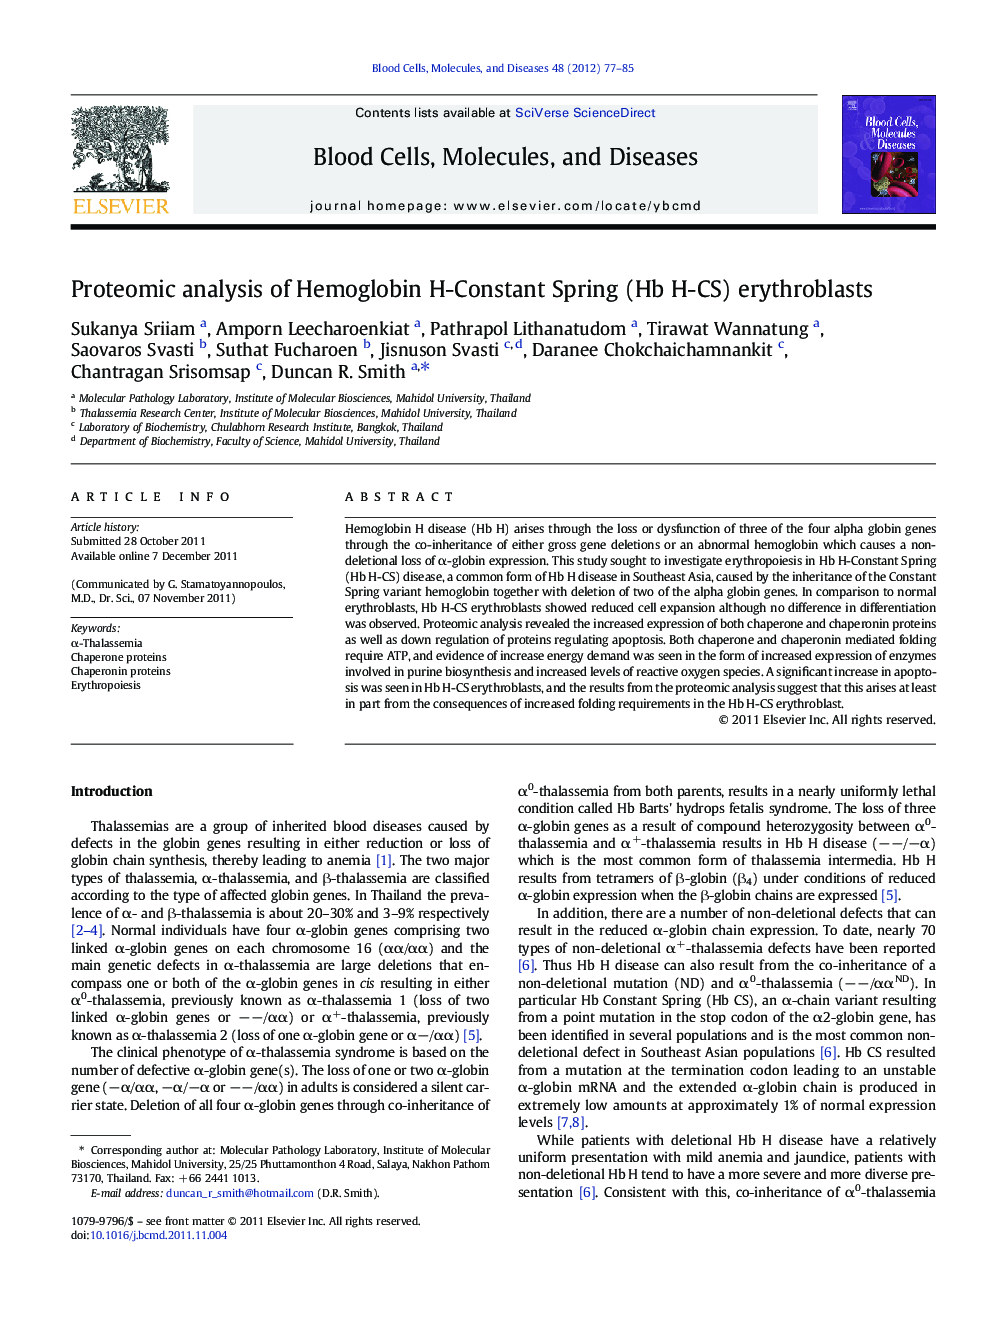 Proteomic analysis of Hemoglobin H-Constant Spring (Hb H-CS) erythroblasts